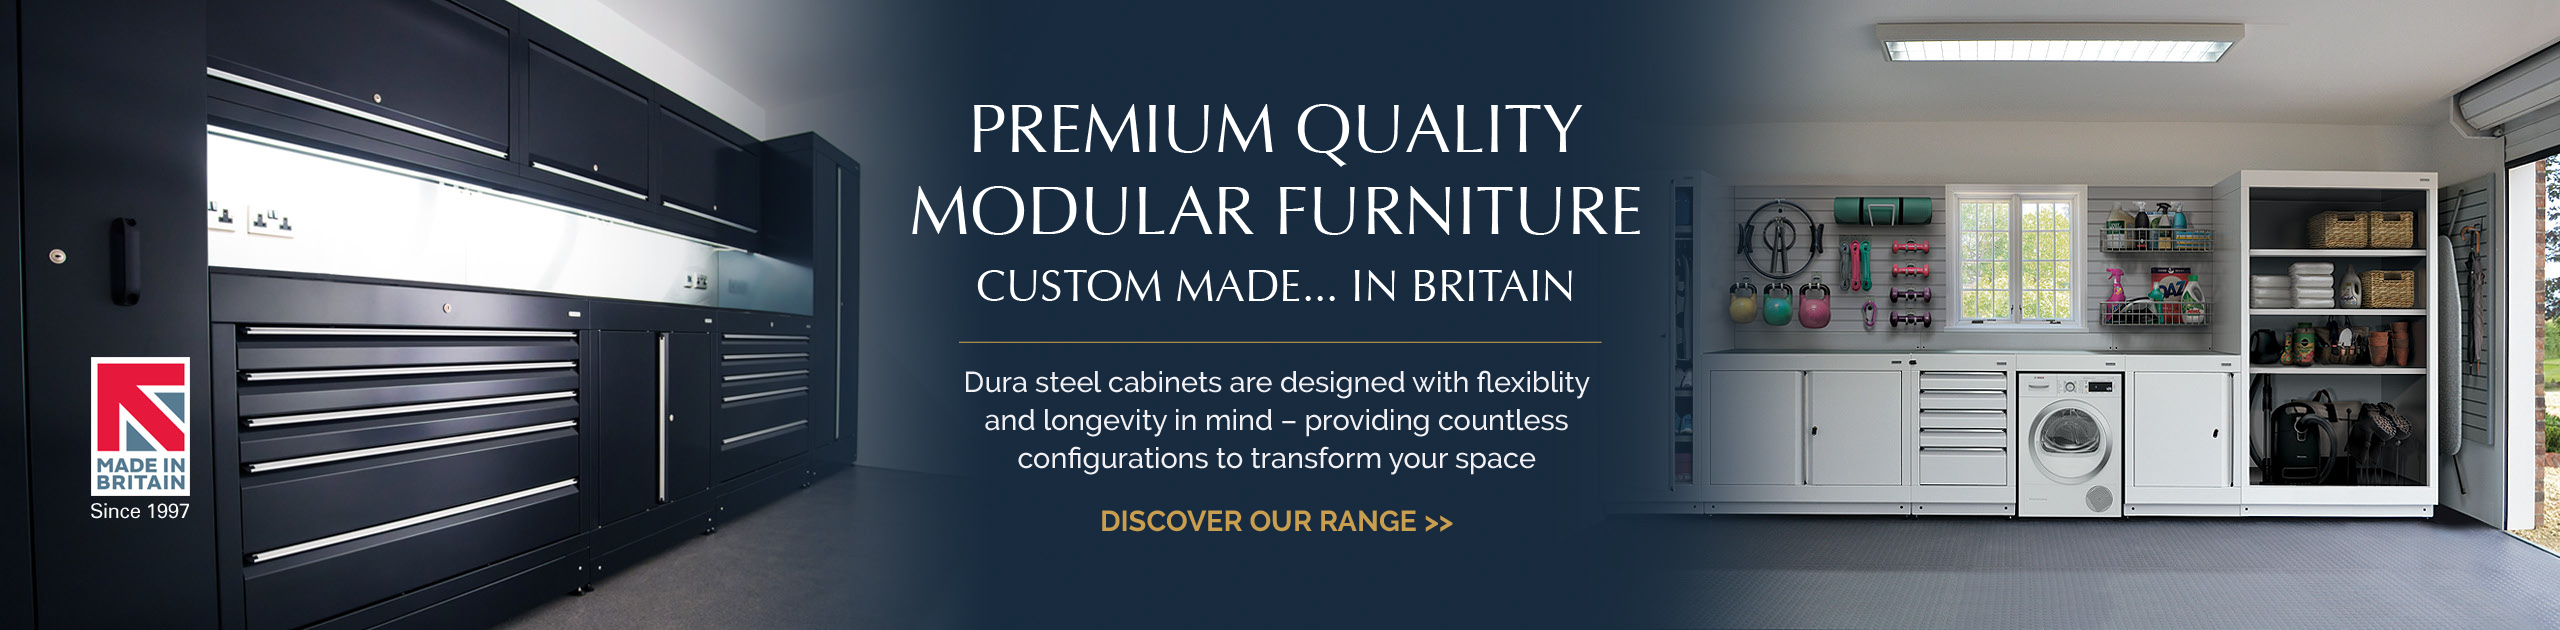 Premium quality modular furniture, custom made in Britain